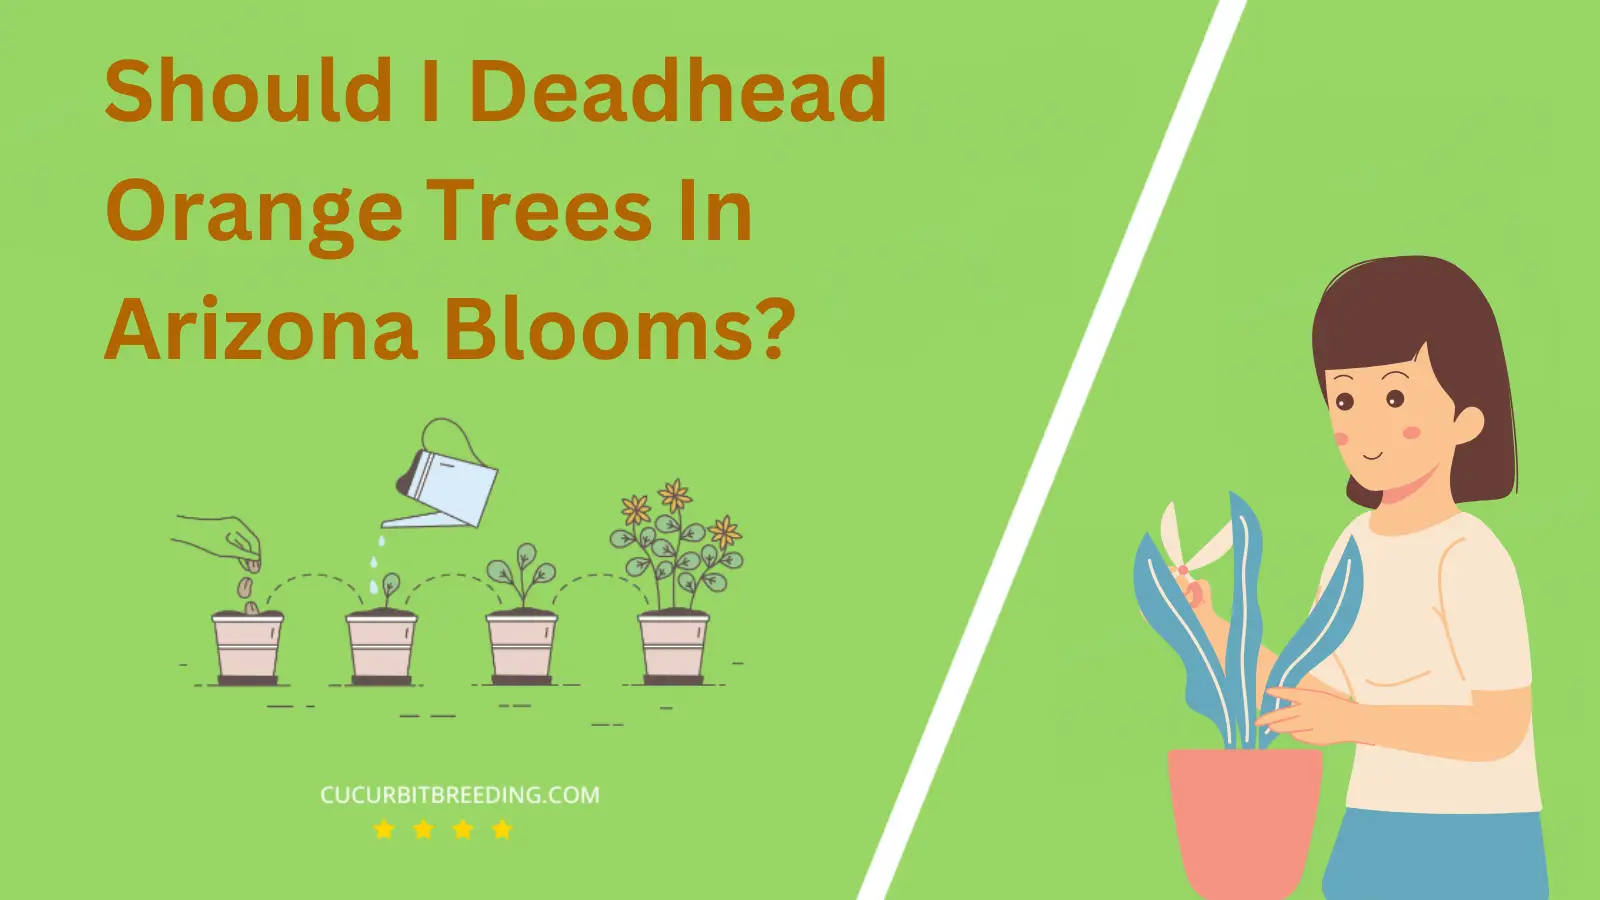 Should I Deadhead Orange Trees In Arizona Blooms?